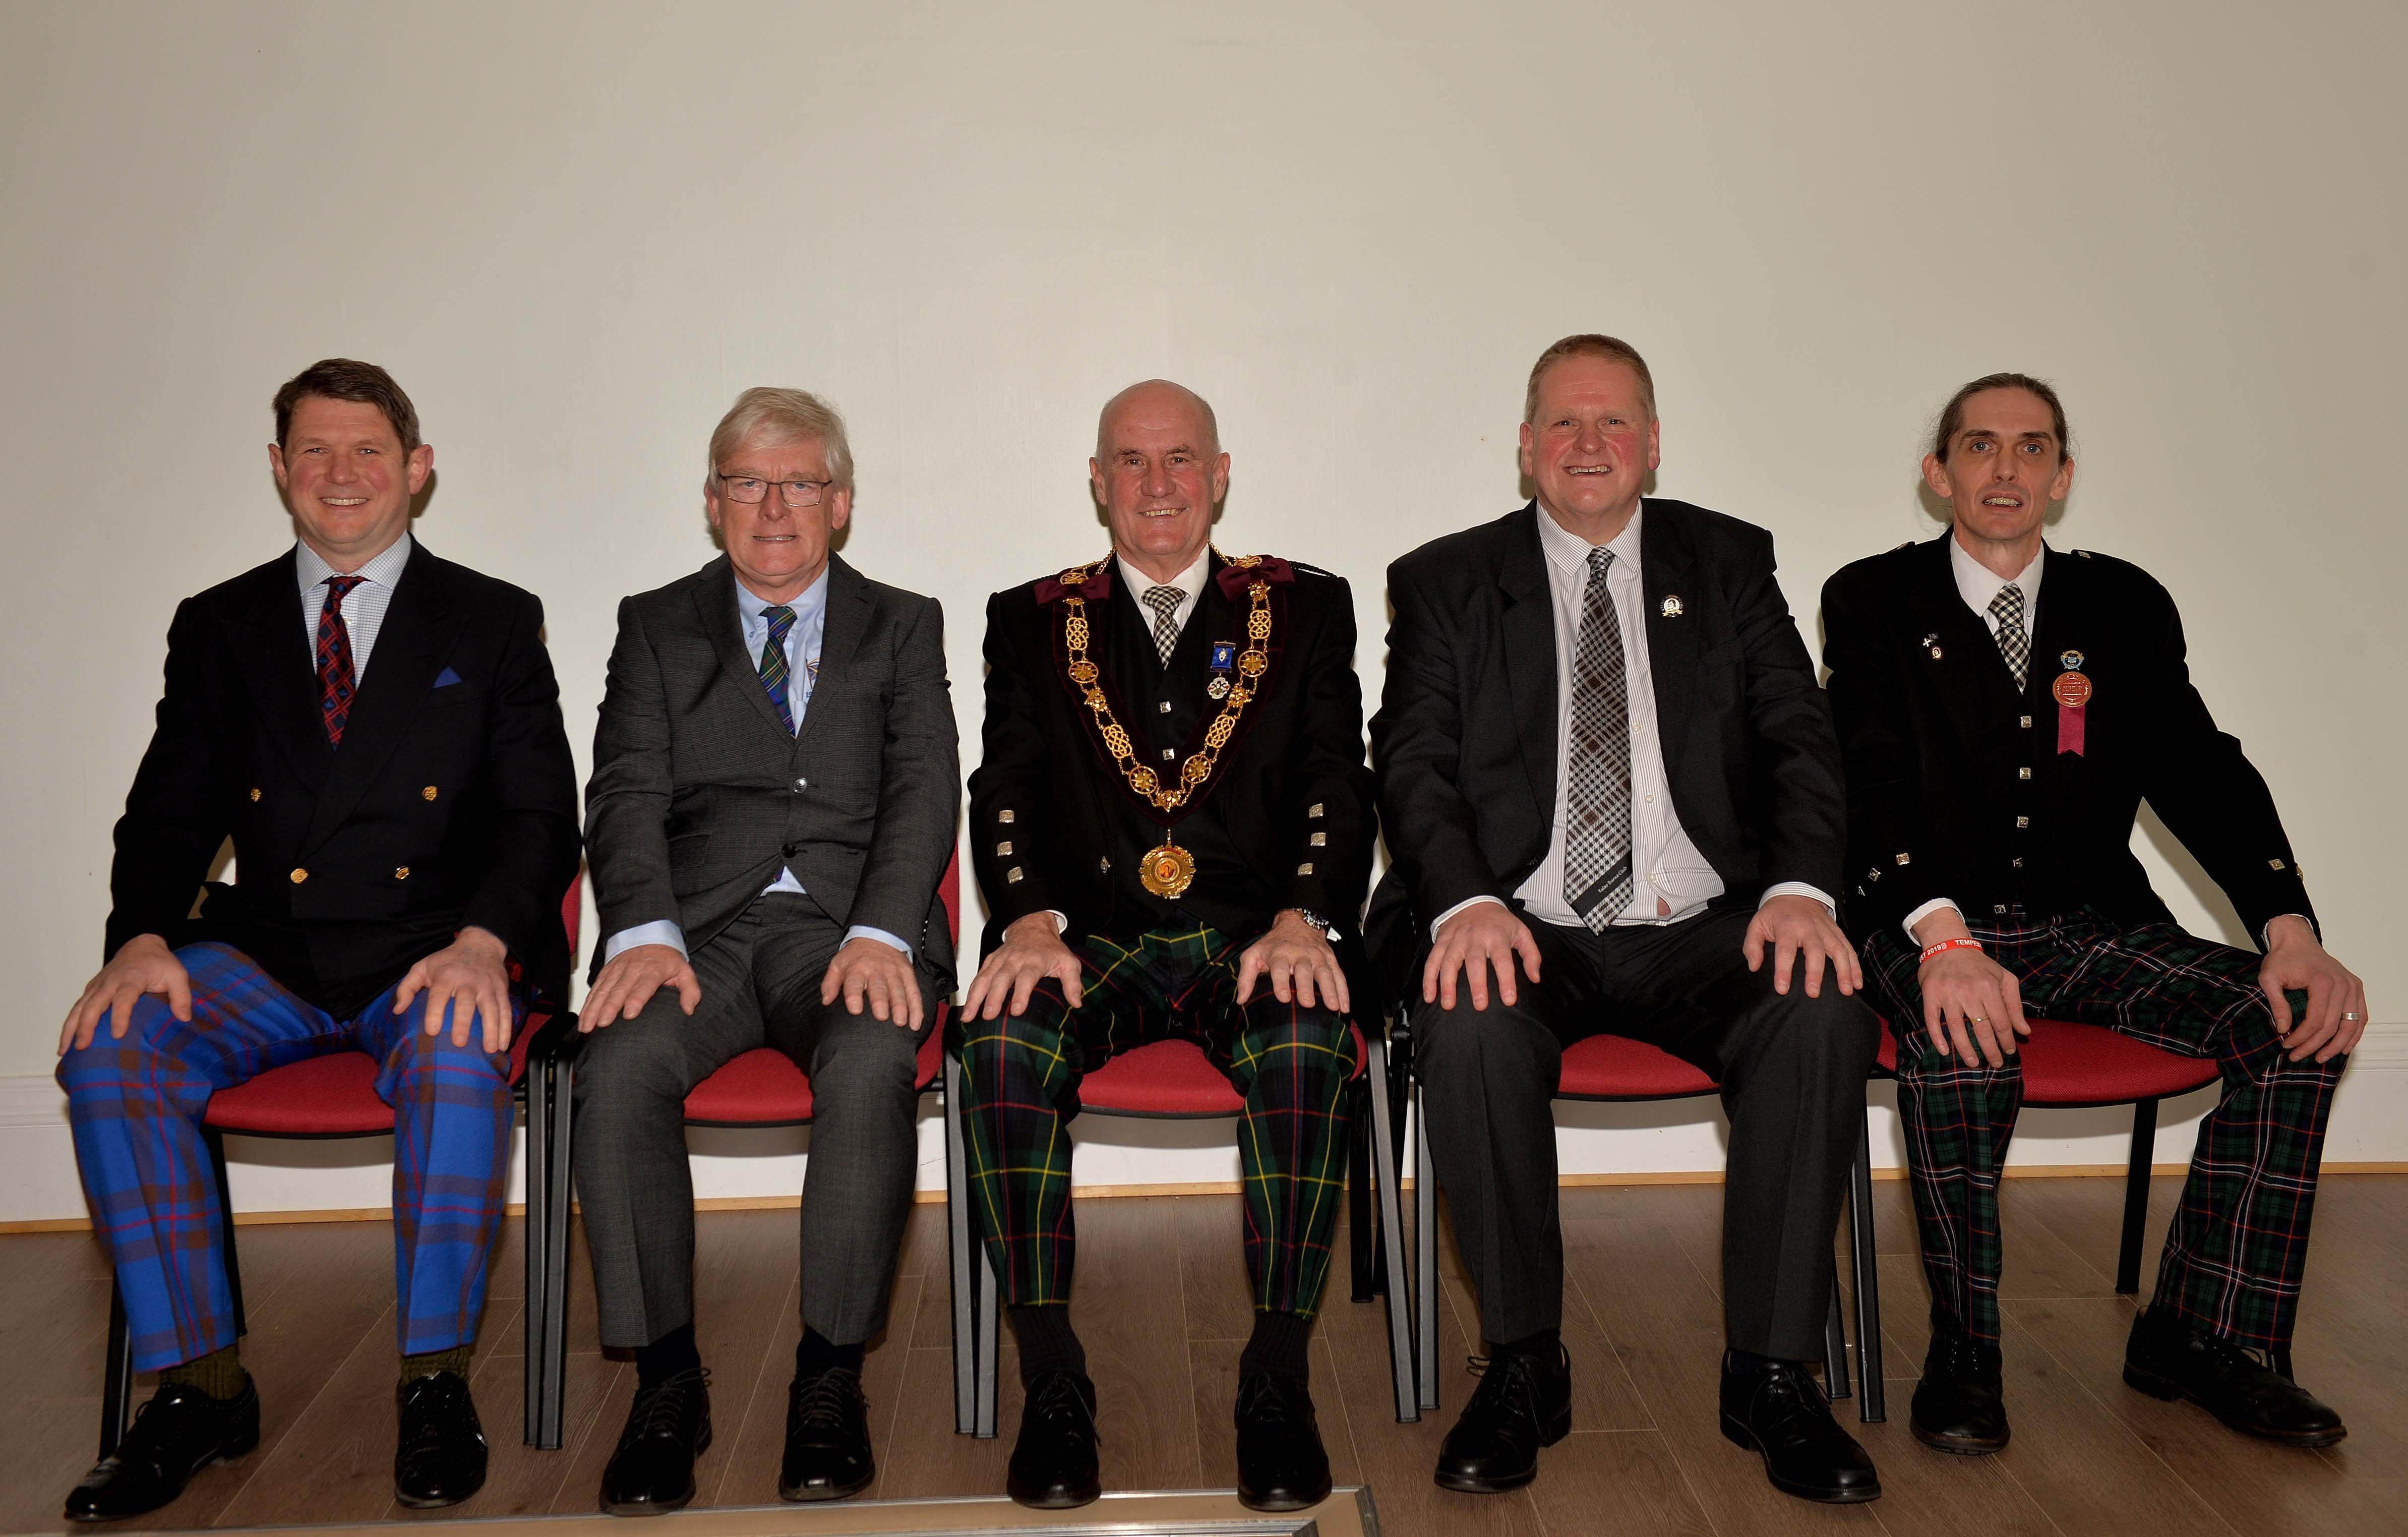 Top table: Donald Francis, Ian Landles, Alastair Christie, Tom Tinlin and Matthew Burgess.